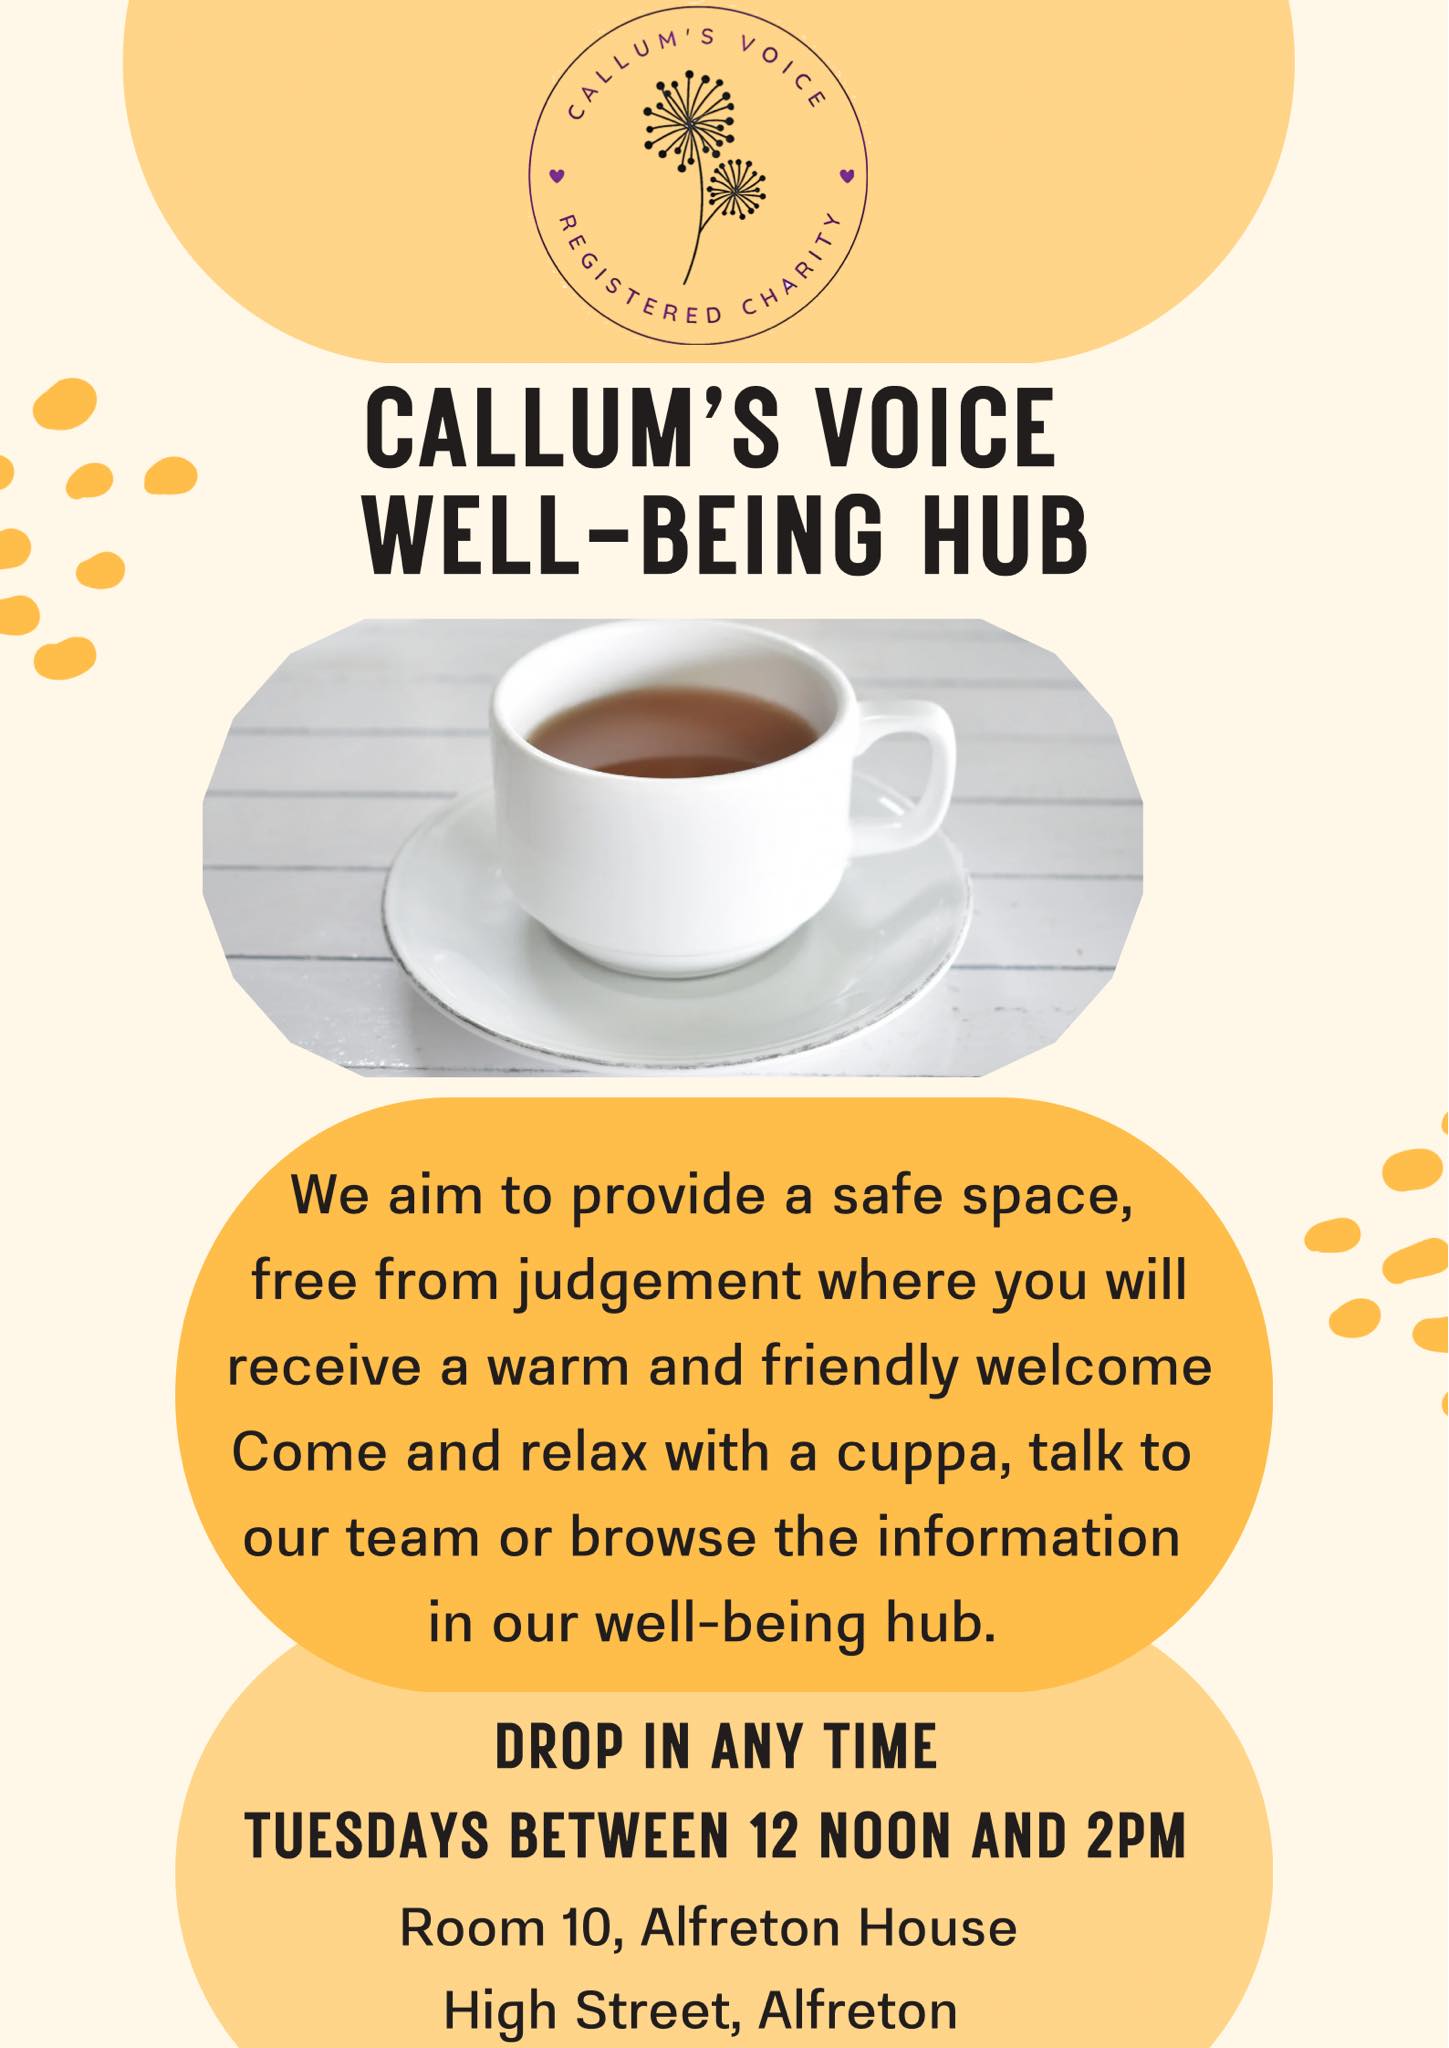 Callum's Voice will open a wellbeing hub in Alfreton